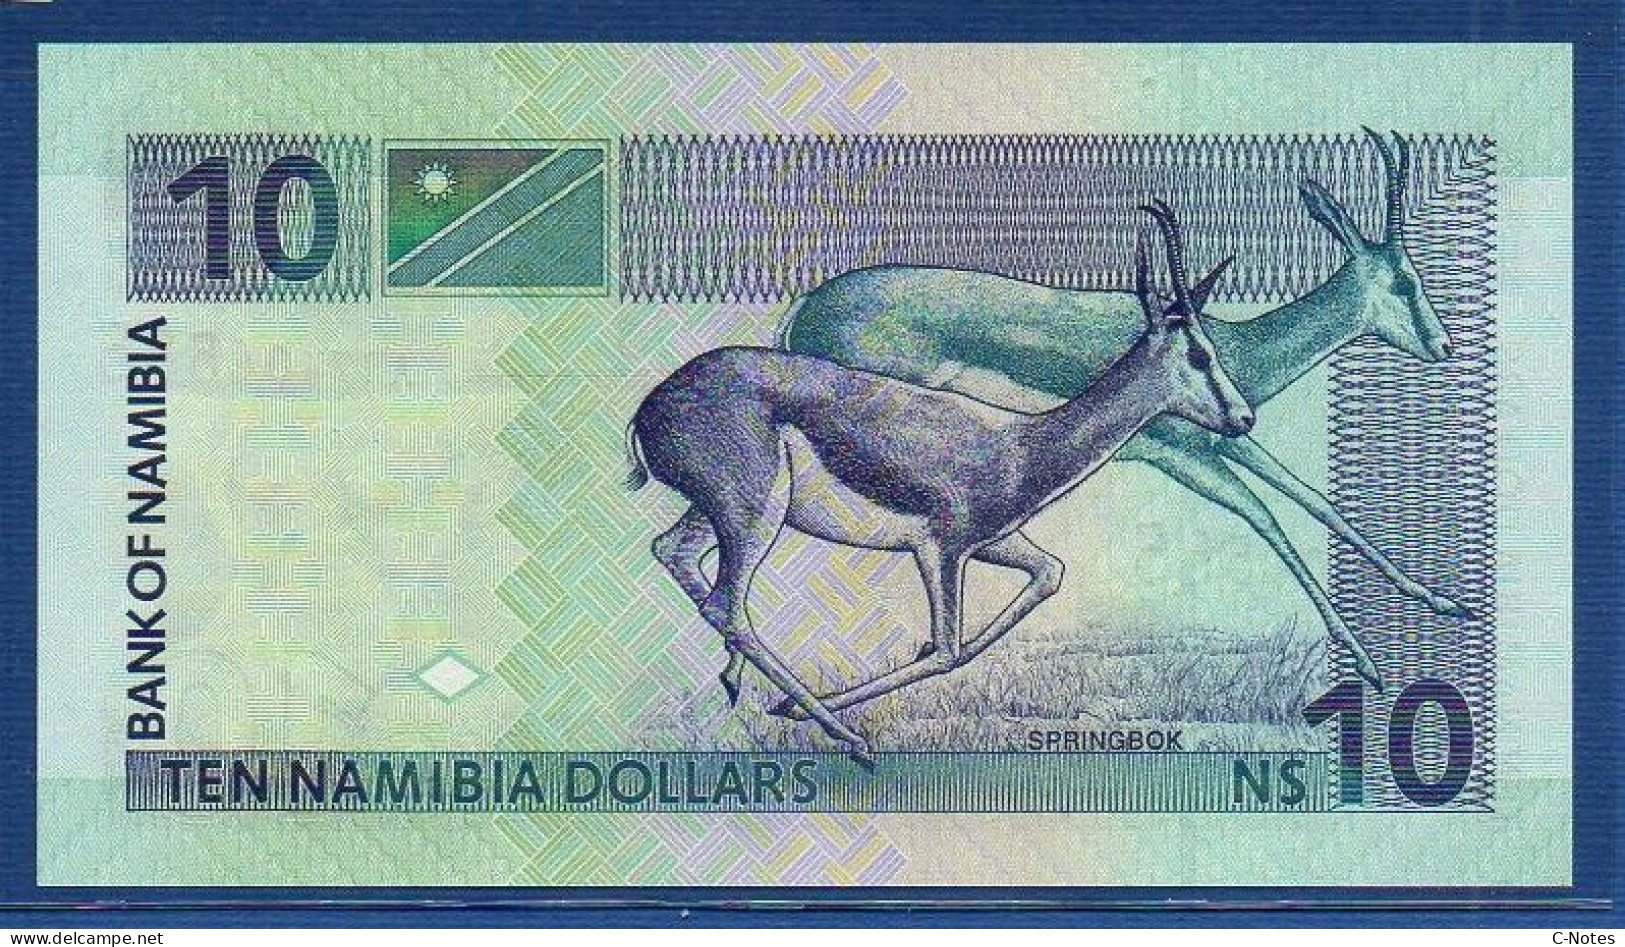 NAMIBIA - P. 4bA2 – 10 Namibia Dollars ND, UNC, S/n A17404585 - Namibie